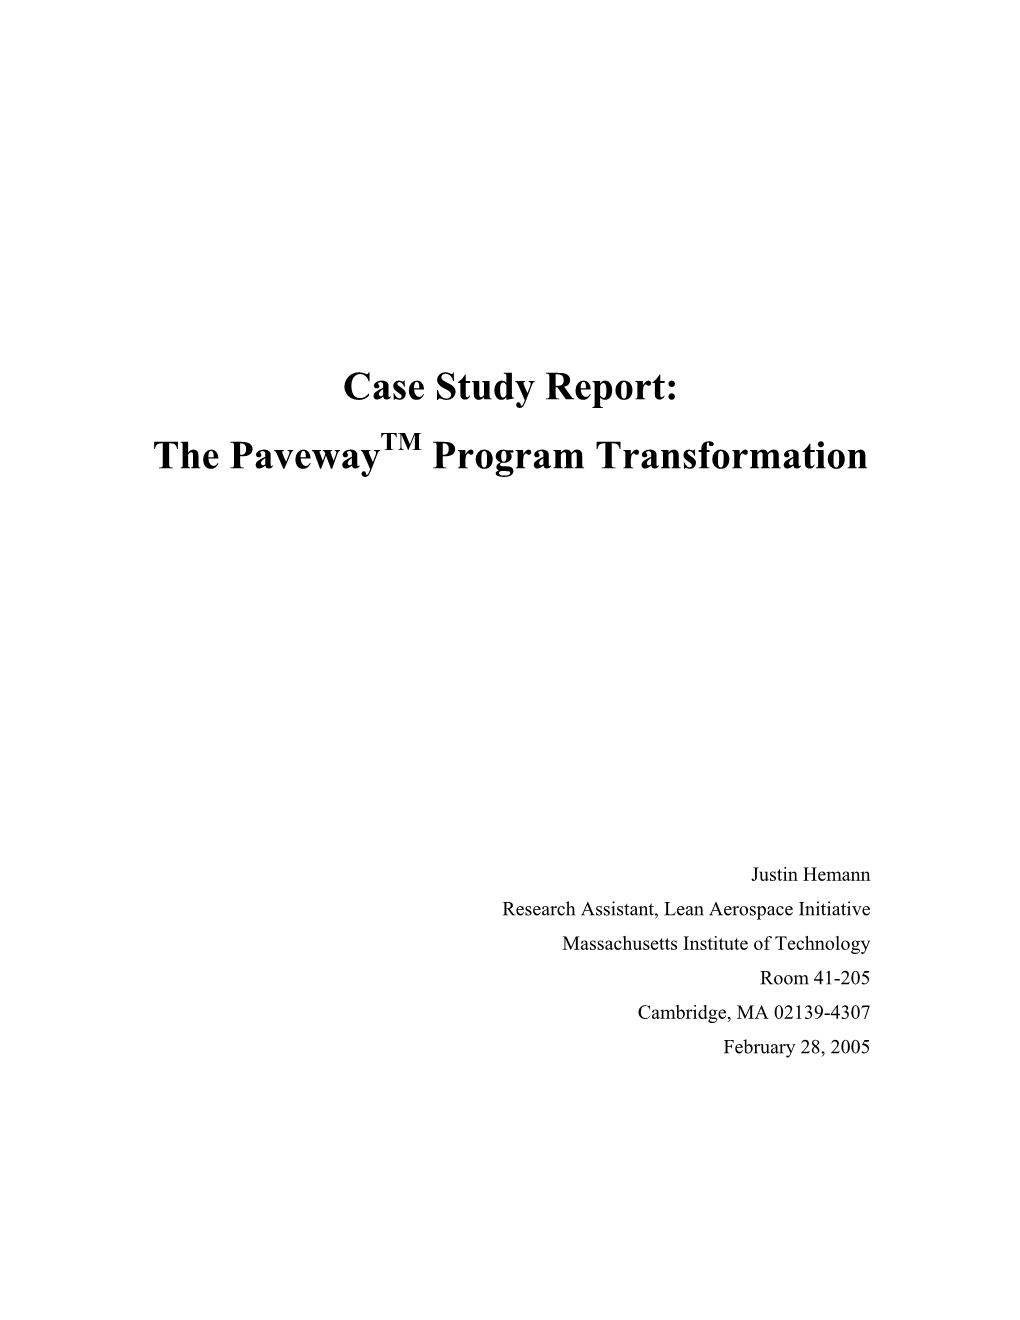 1968 Paveway Program Begins